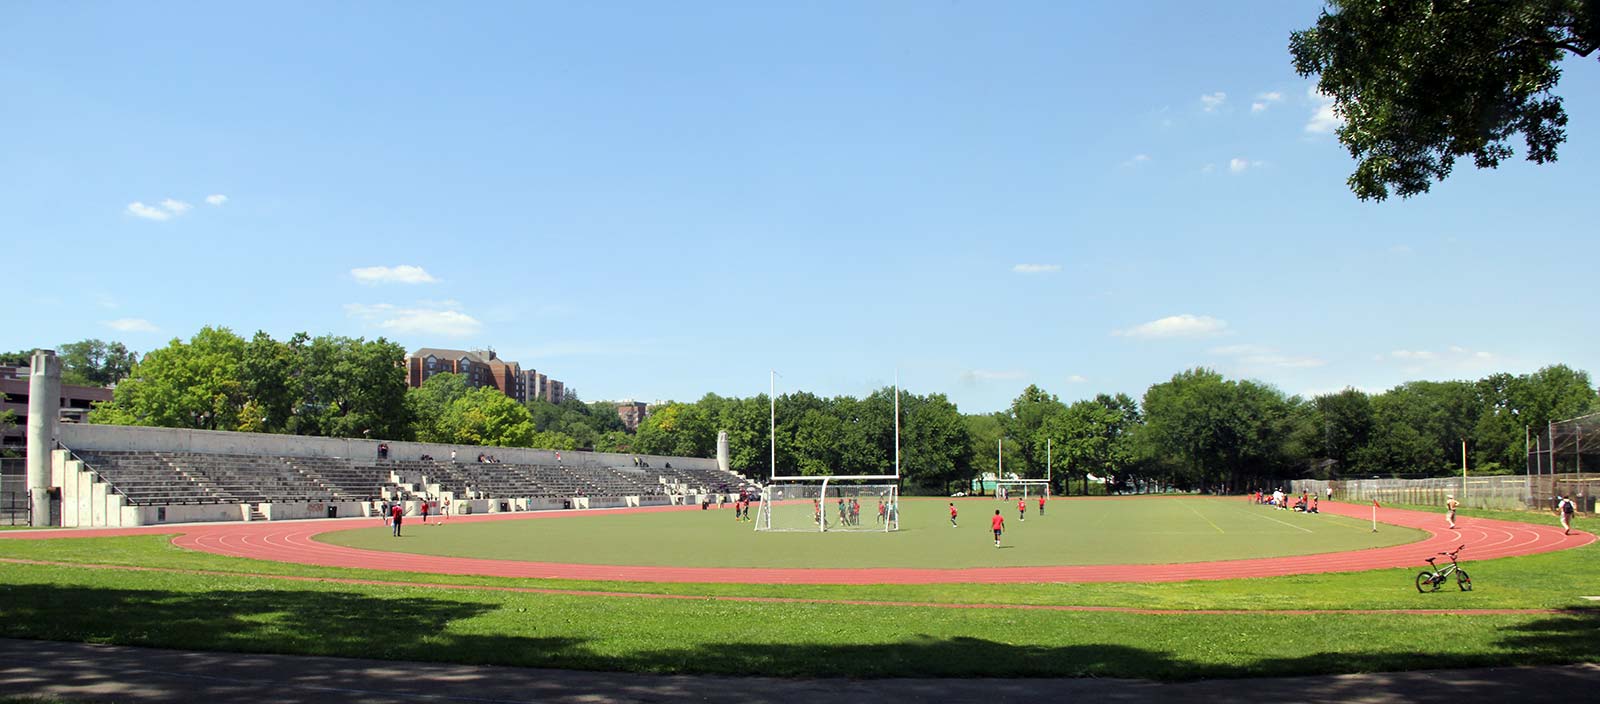 VAN CORTLANDT PARK - Facilities - Columbia University Athletics